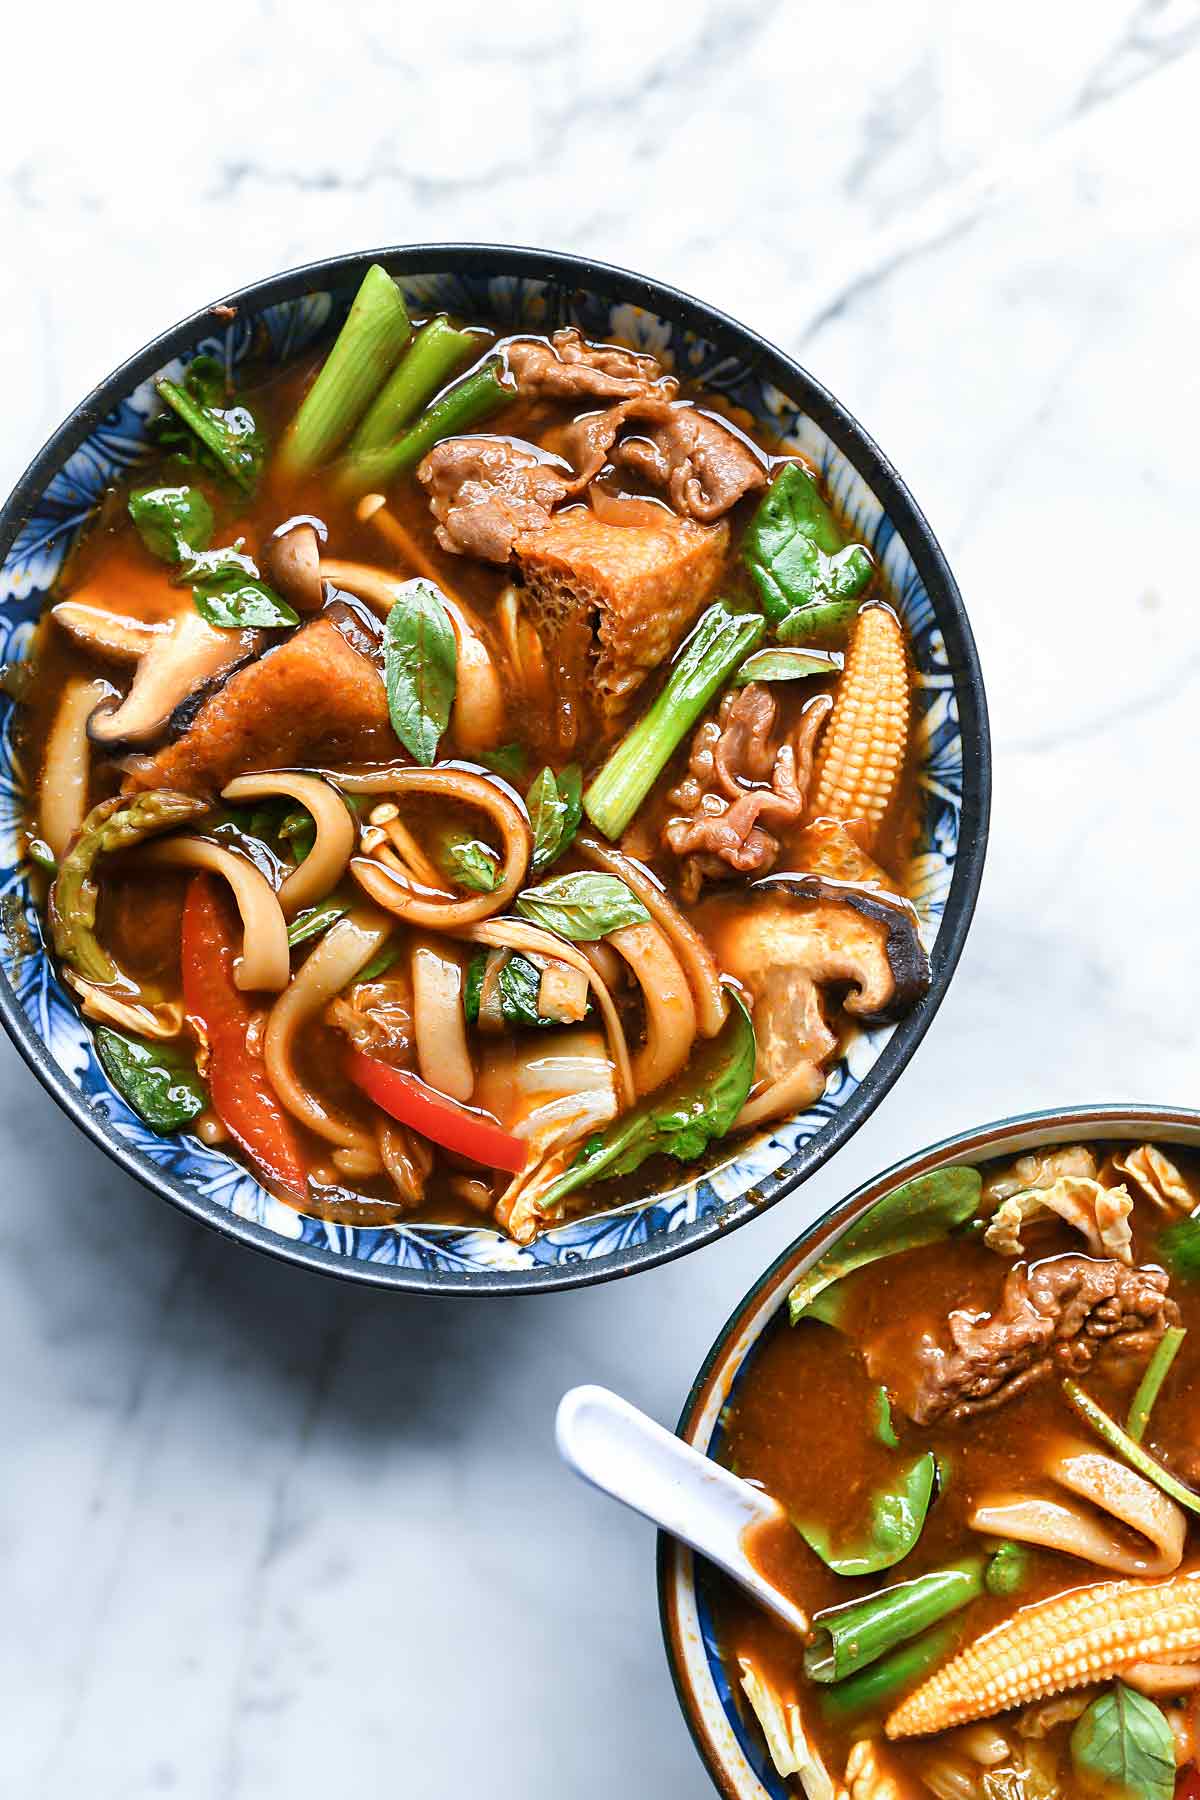 https://www.foodiecrush.com/wp-content/uploads/2018/02/Asian-Red-Curry-Hot-Pot-foodiecrush.com-063.jpg